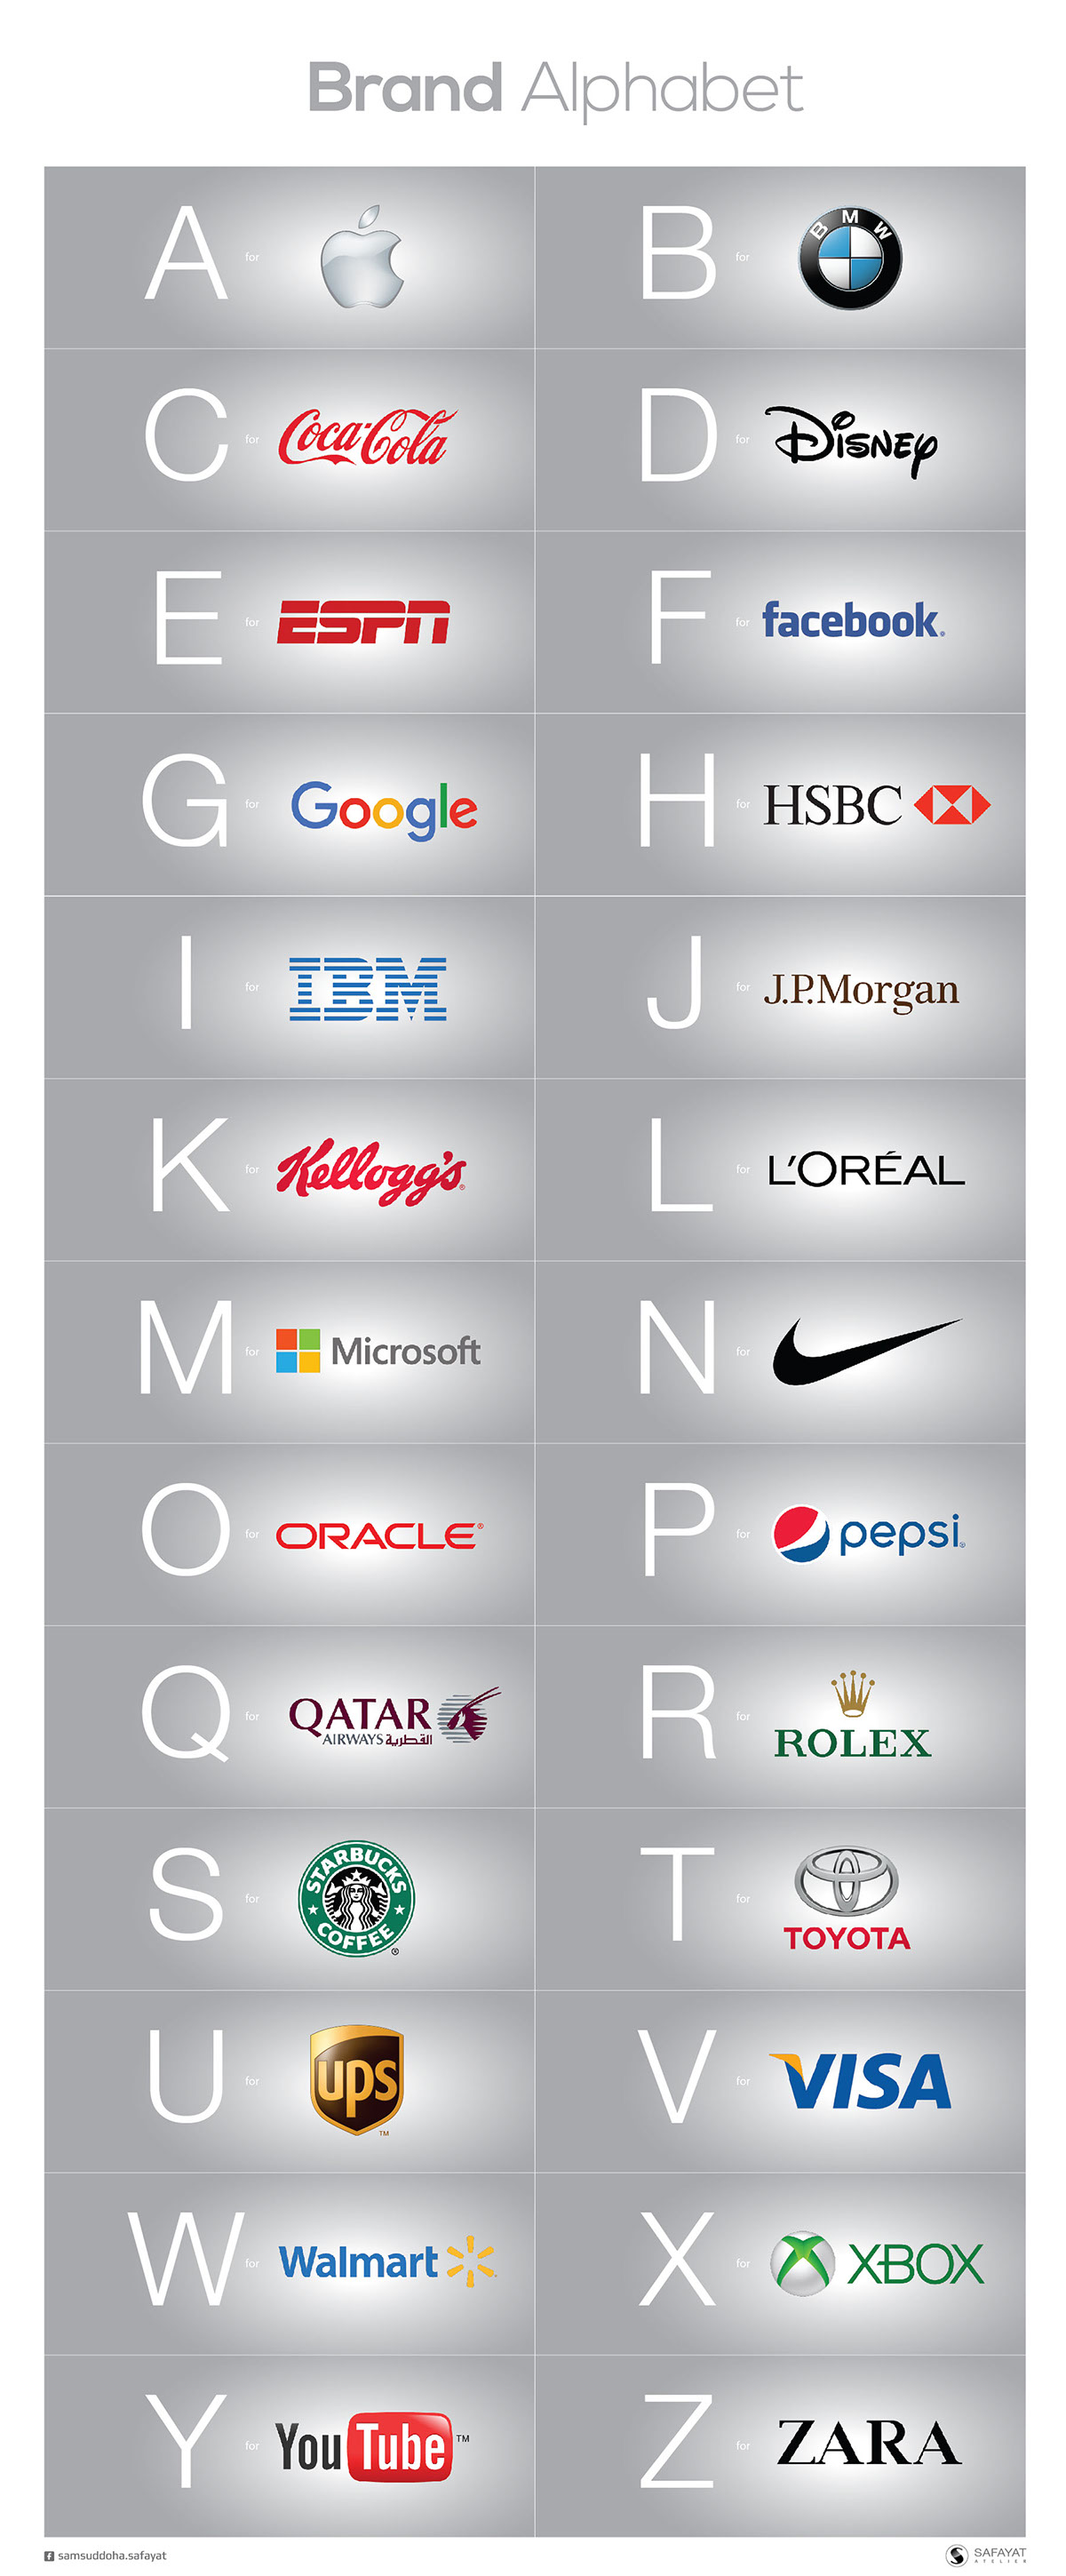 Brand Alphabet brand logo Icon brand identity brand communication